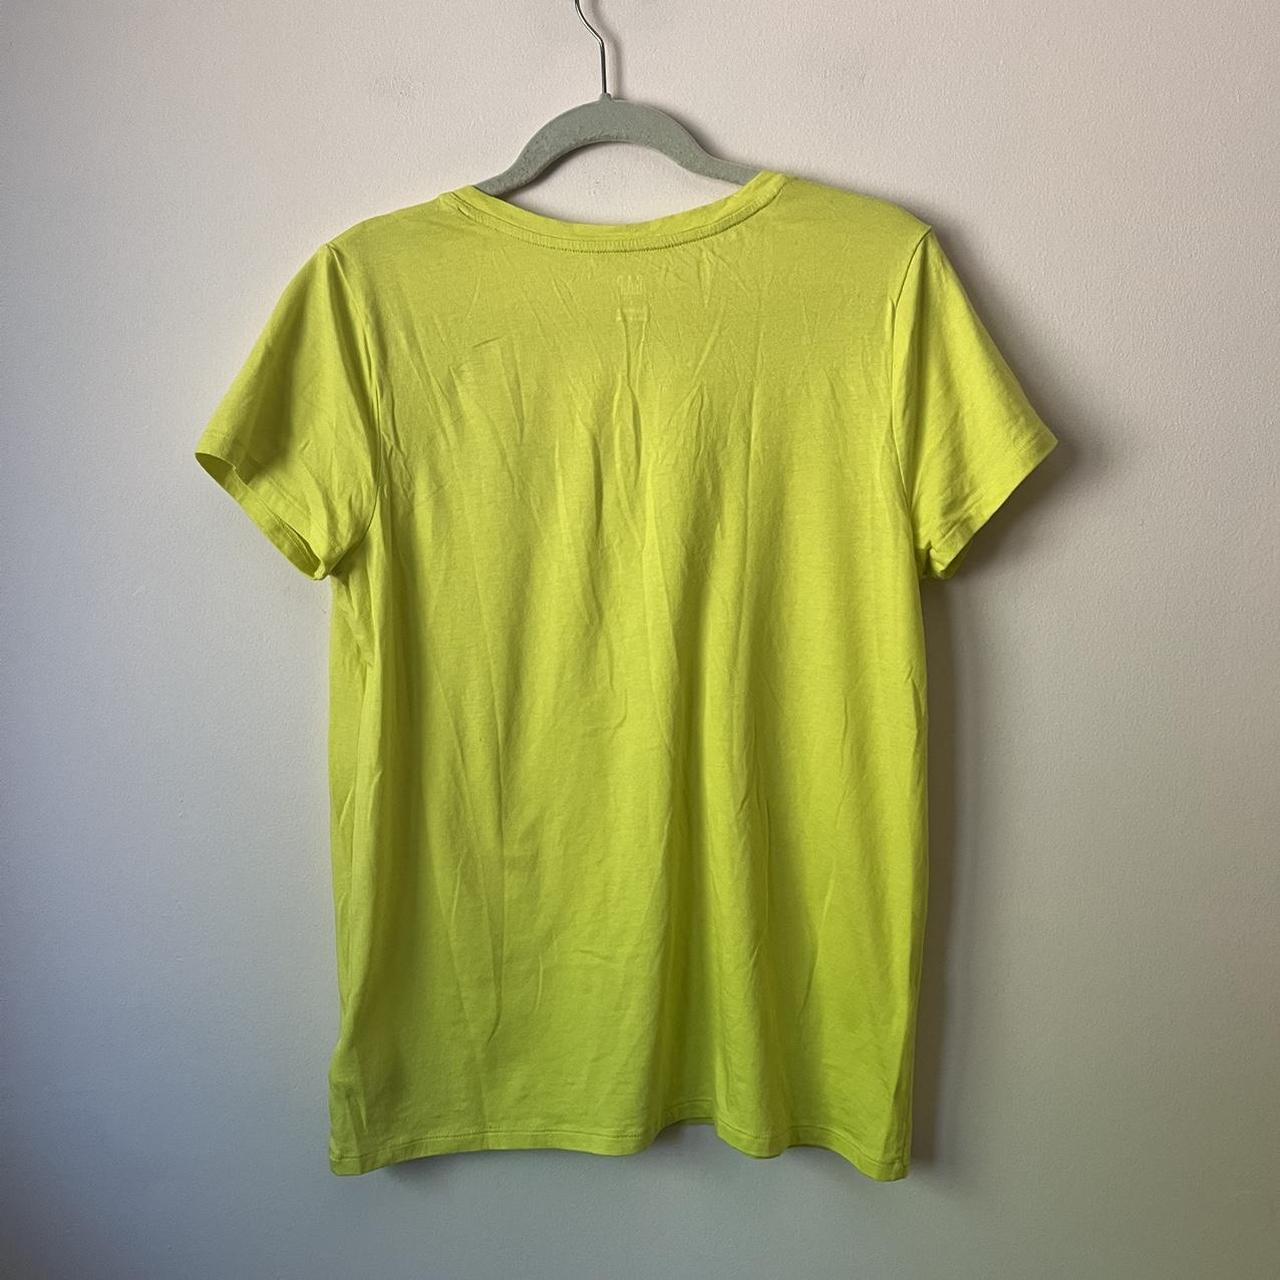 Gap Women's Yellow and Green T-shirt | Depop